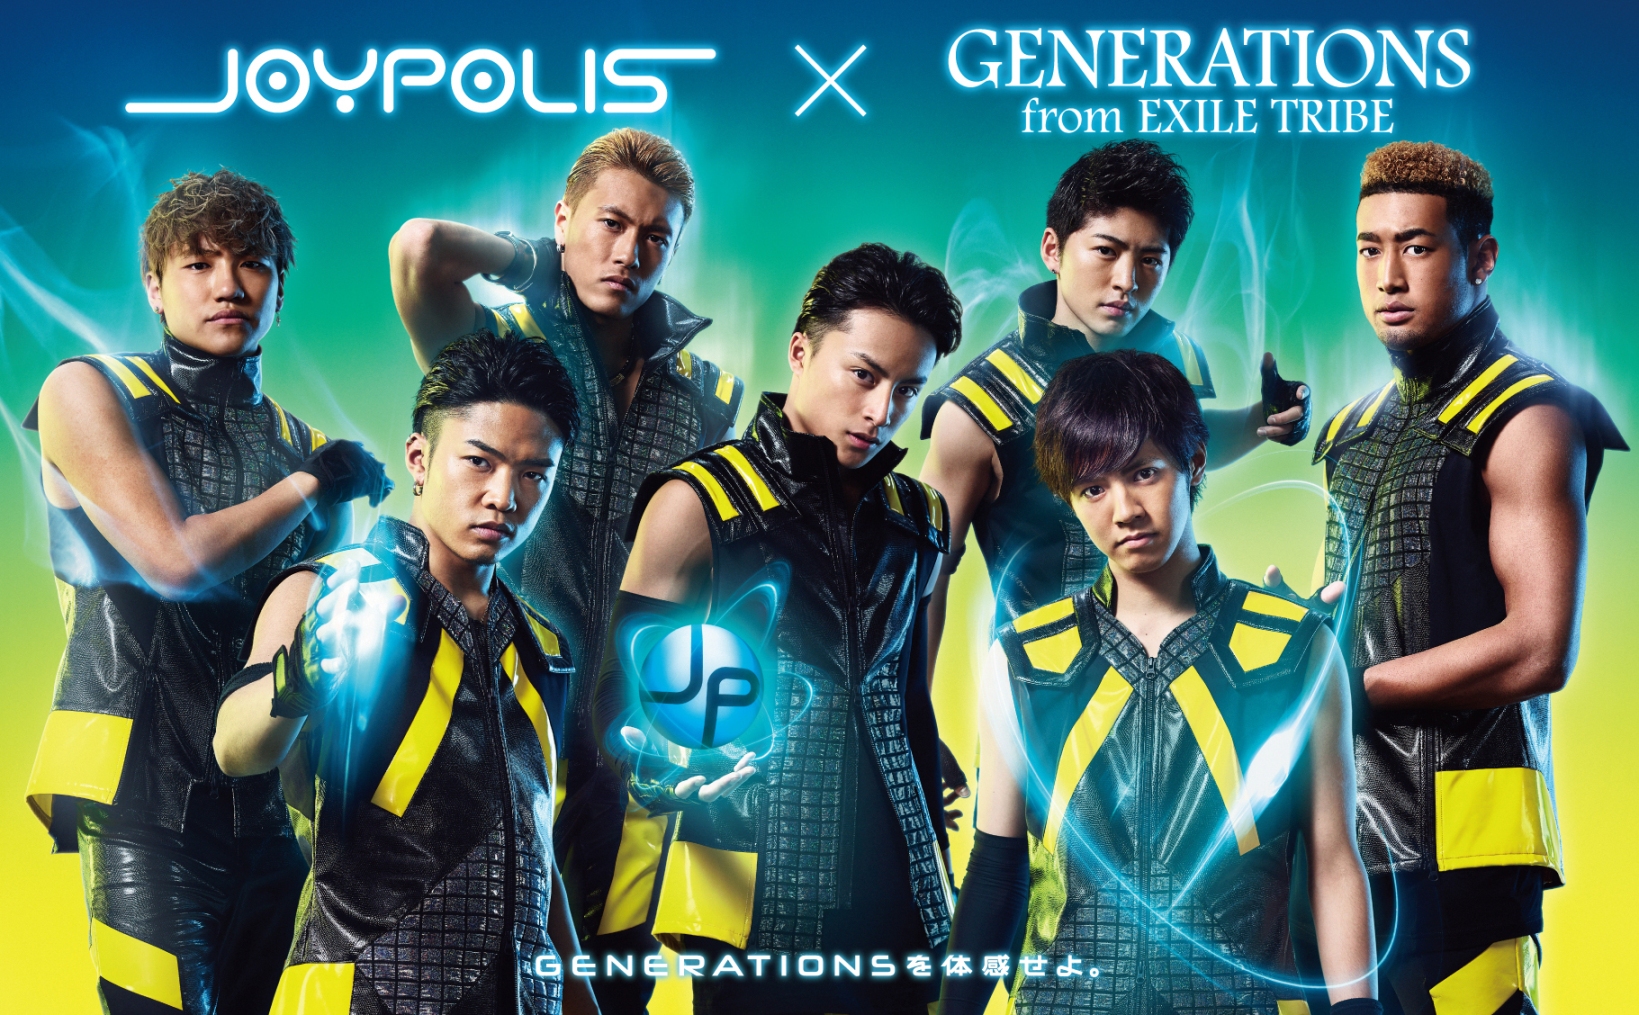 Joypolis Generations From Exile Tribe 株式会社セガのプレスリリース